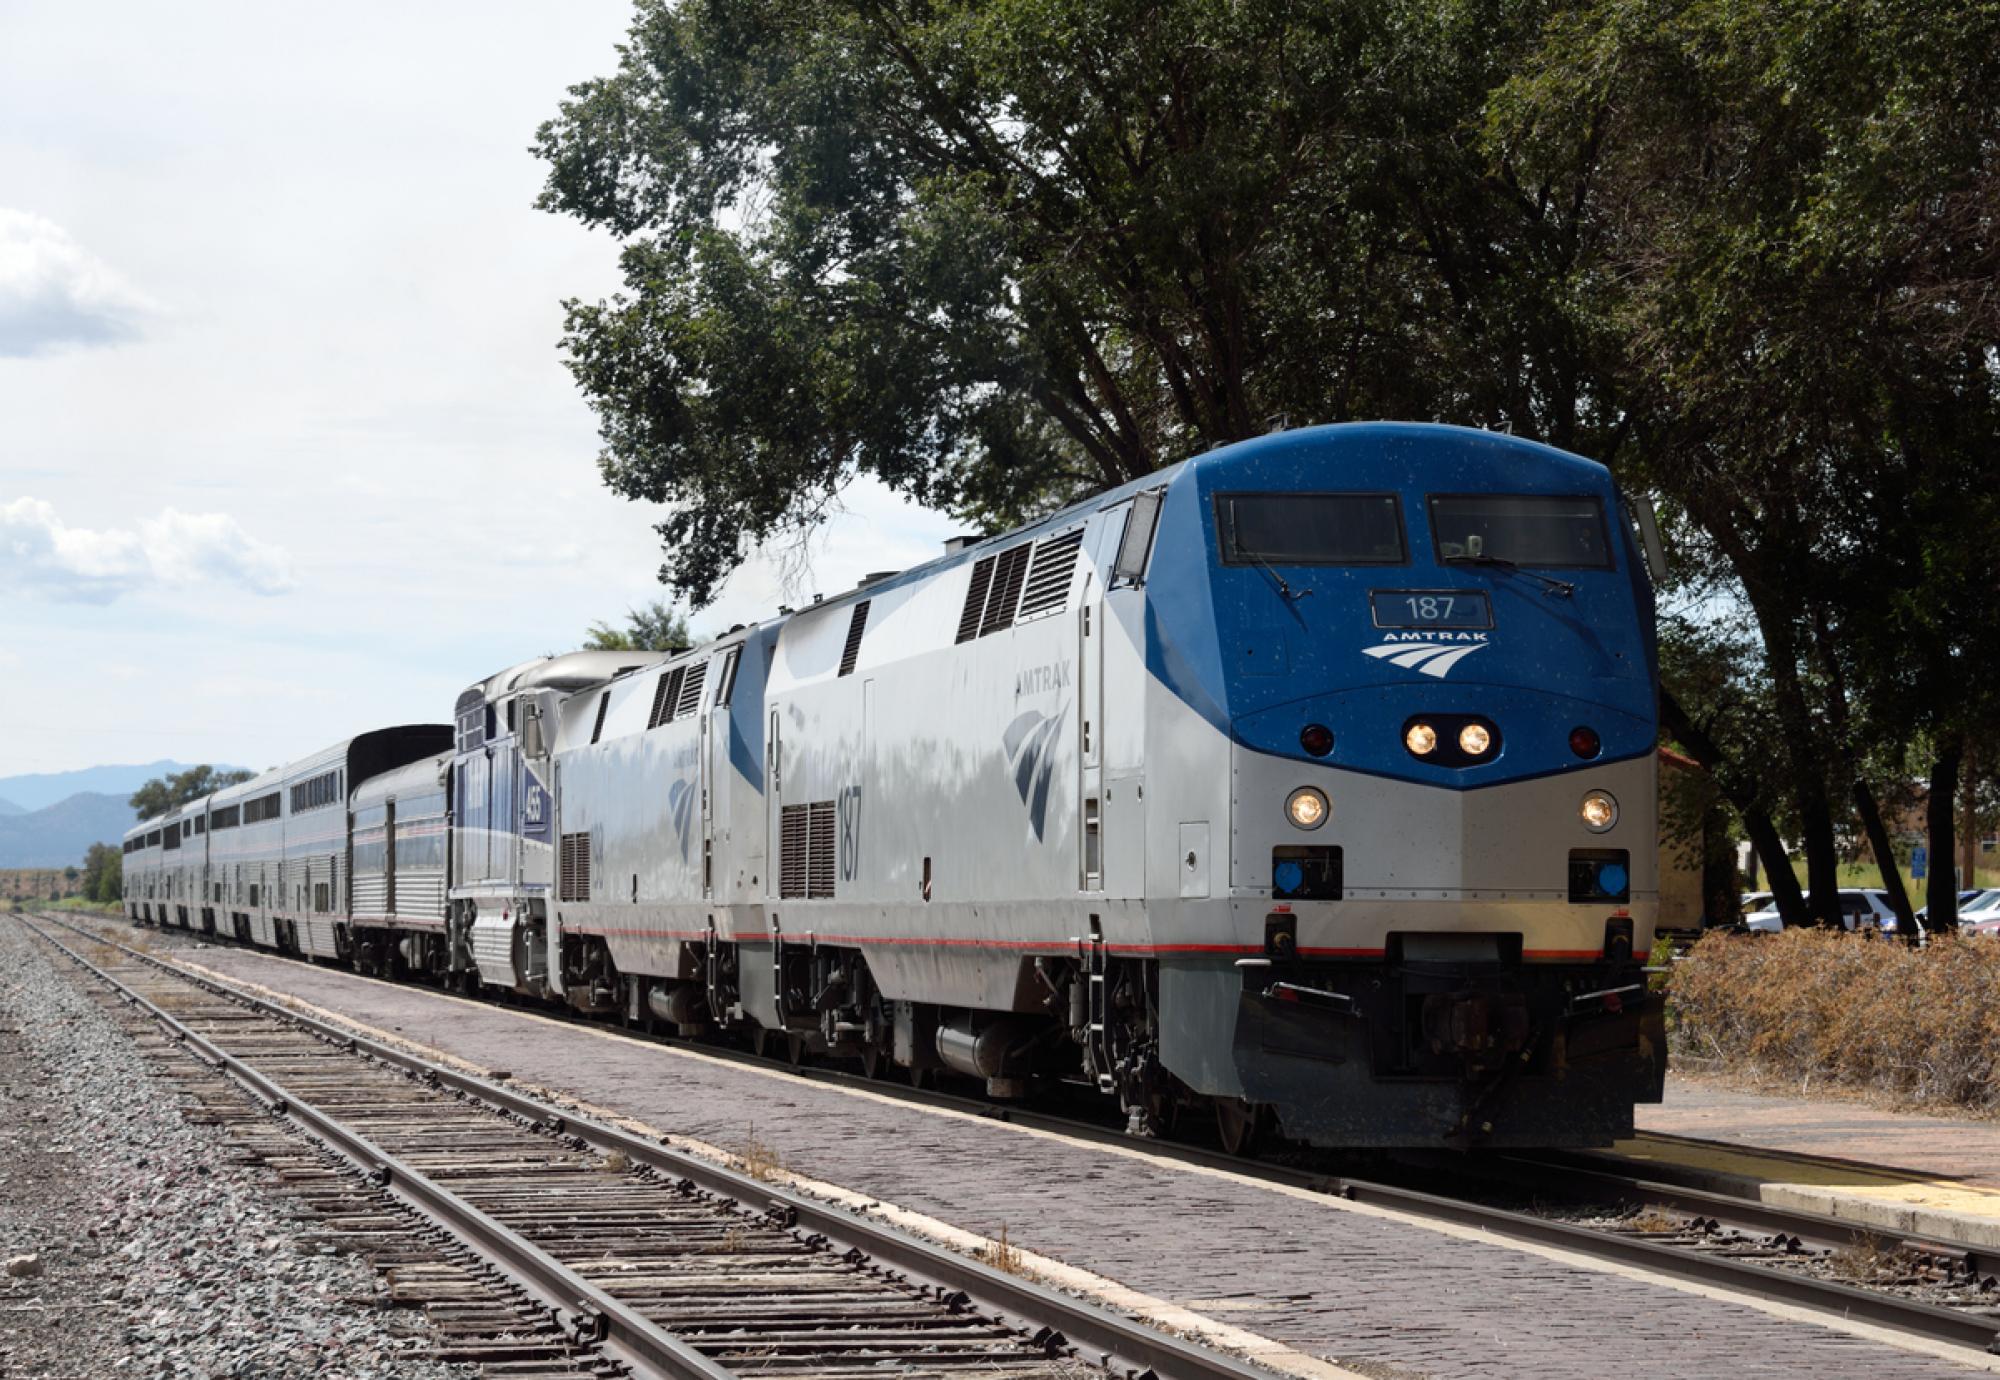 Amtrak train on tracks in America